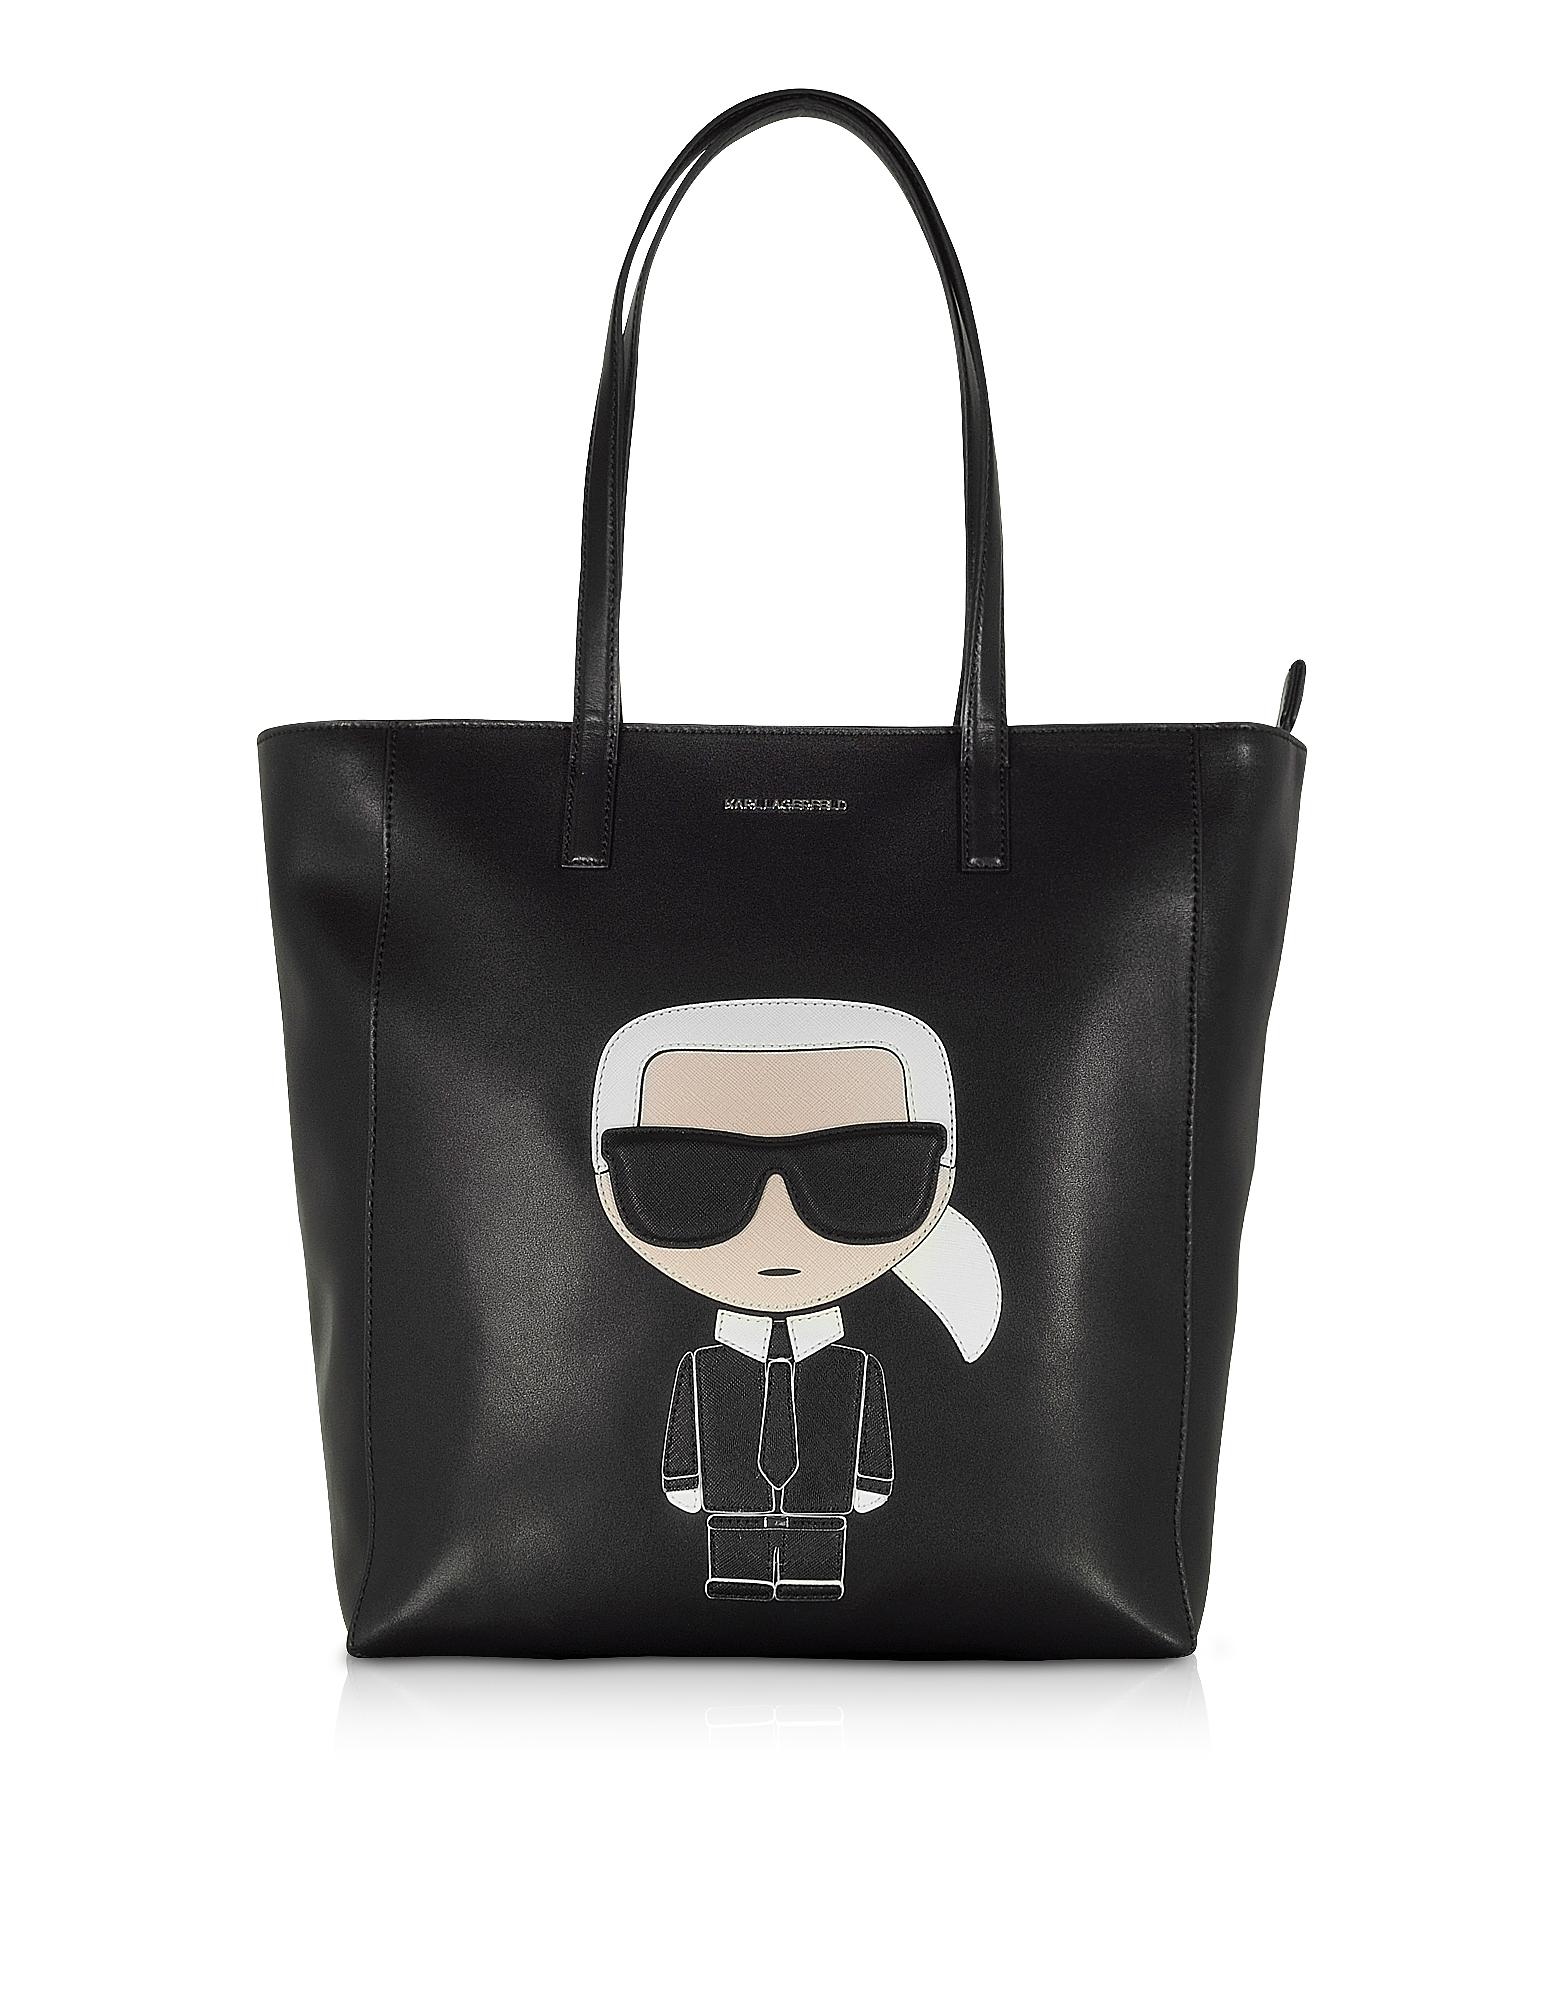 Karl Lagerfeld K/ikonik Soft Tote Bag in Black - Lyst